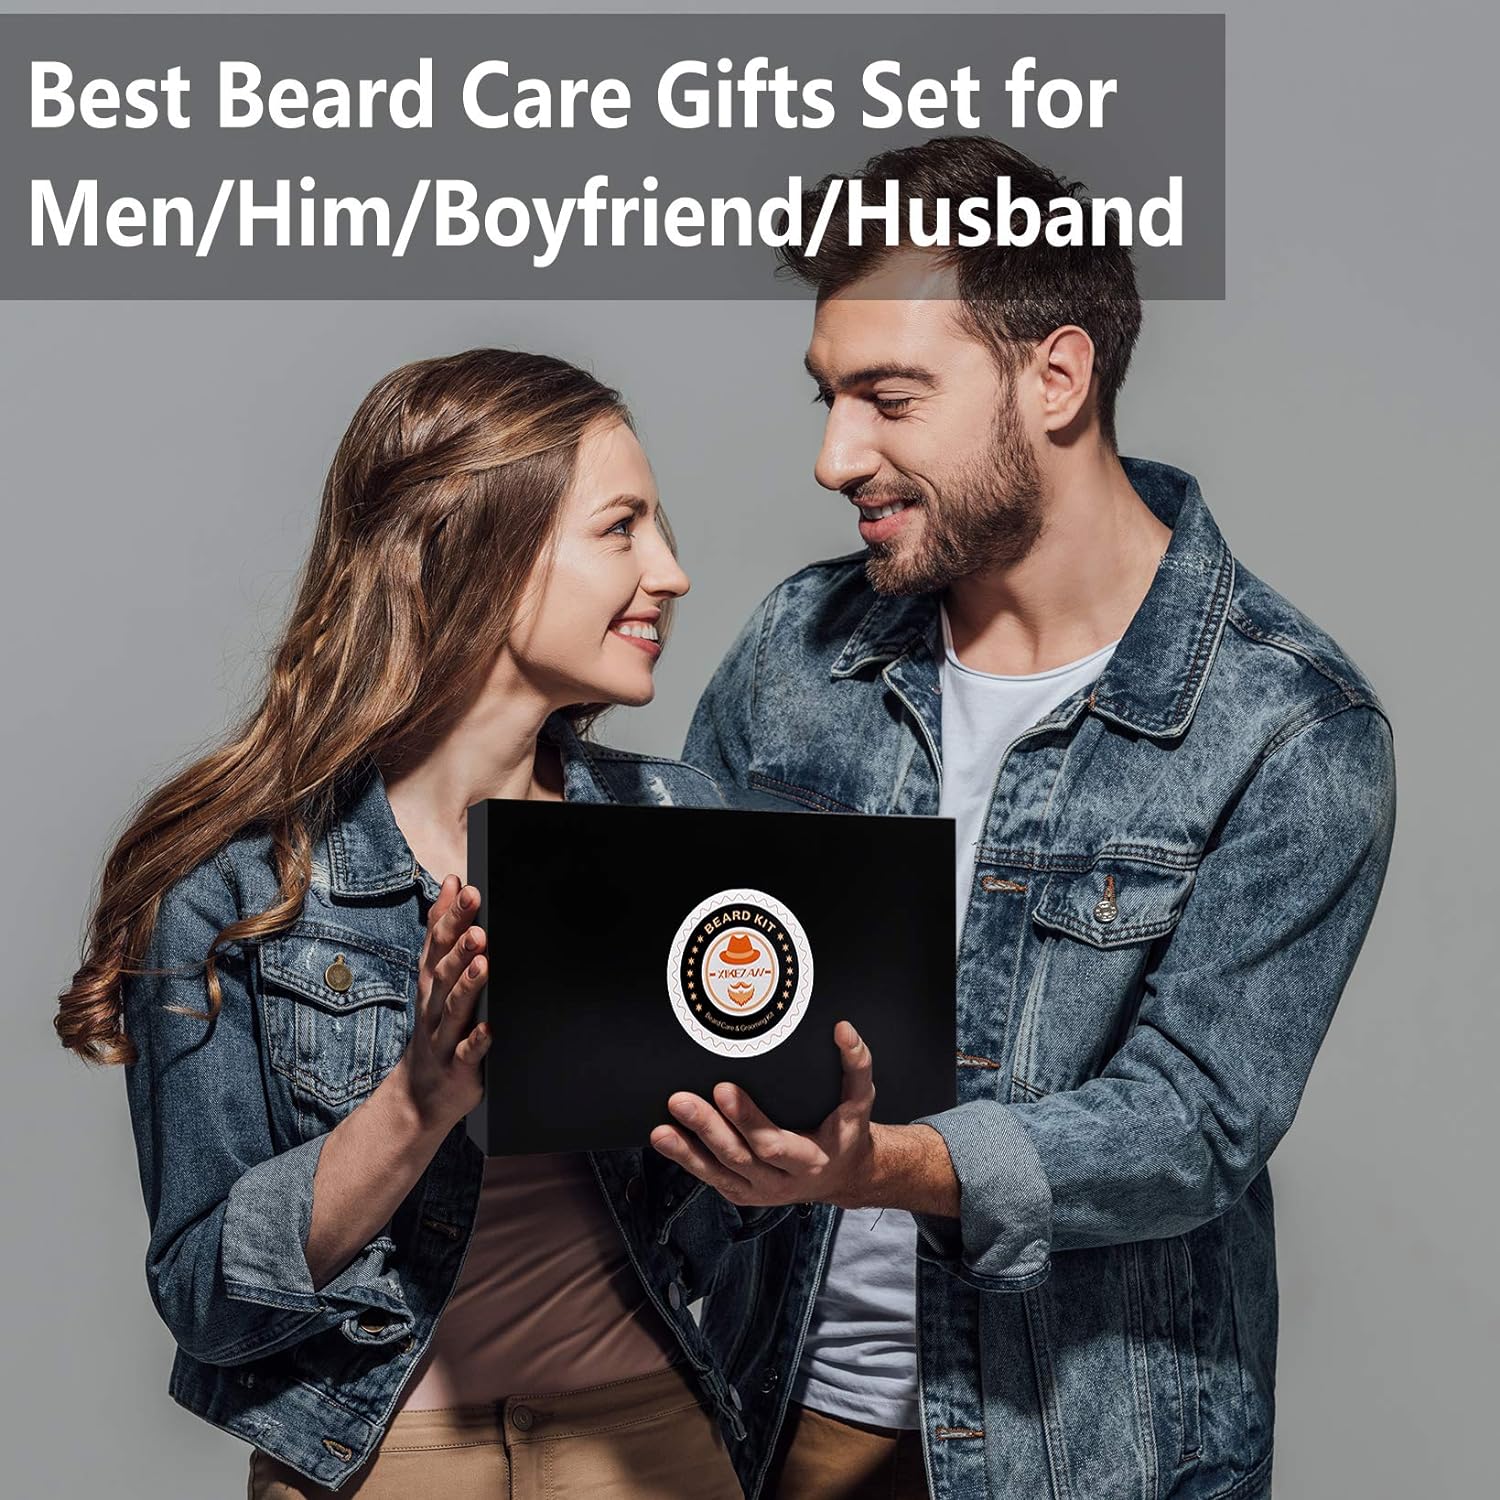 Upgraded Beard Grooming Kit W/Beard Conditioner,Beard Oil,Beard Balm,Beard Brush,Beard Shampoo/Wash,Beard Comb,Beard Scissors,Storage Bag,Beard E-Book,Beard Care Gifts for Men Him